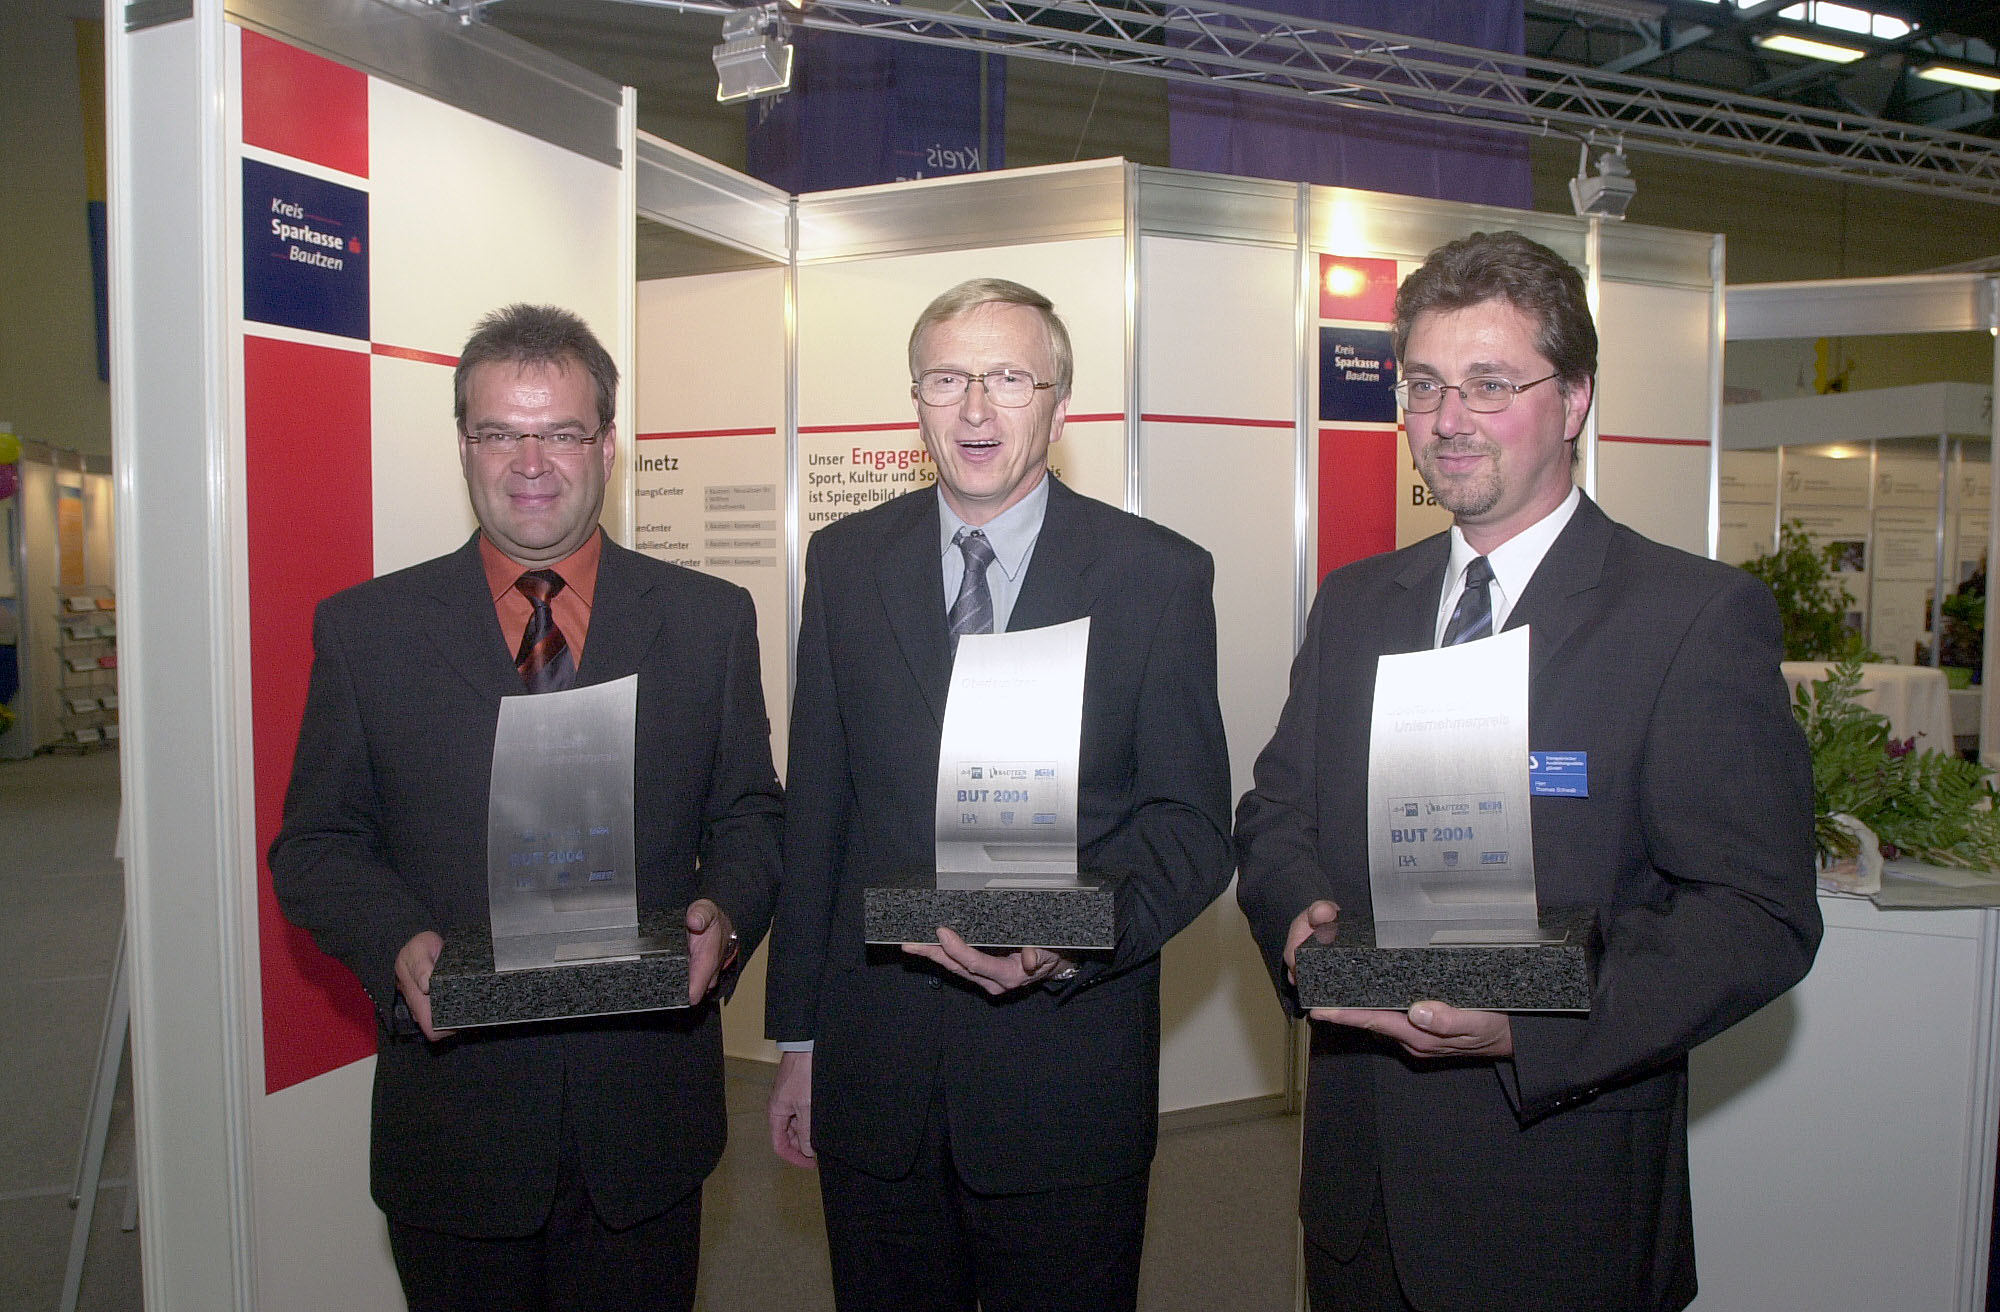 OLUP 2004 Award Ceremony